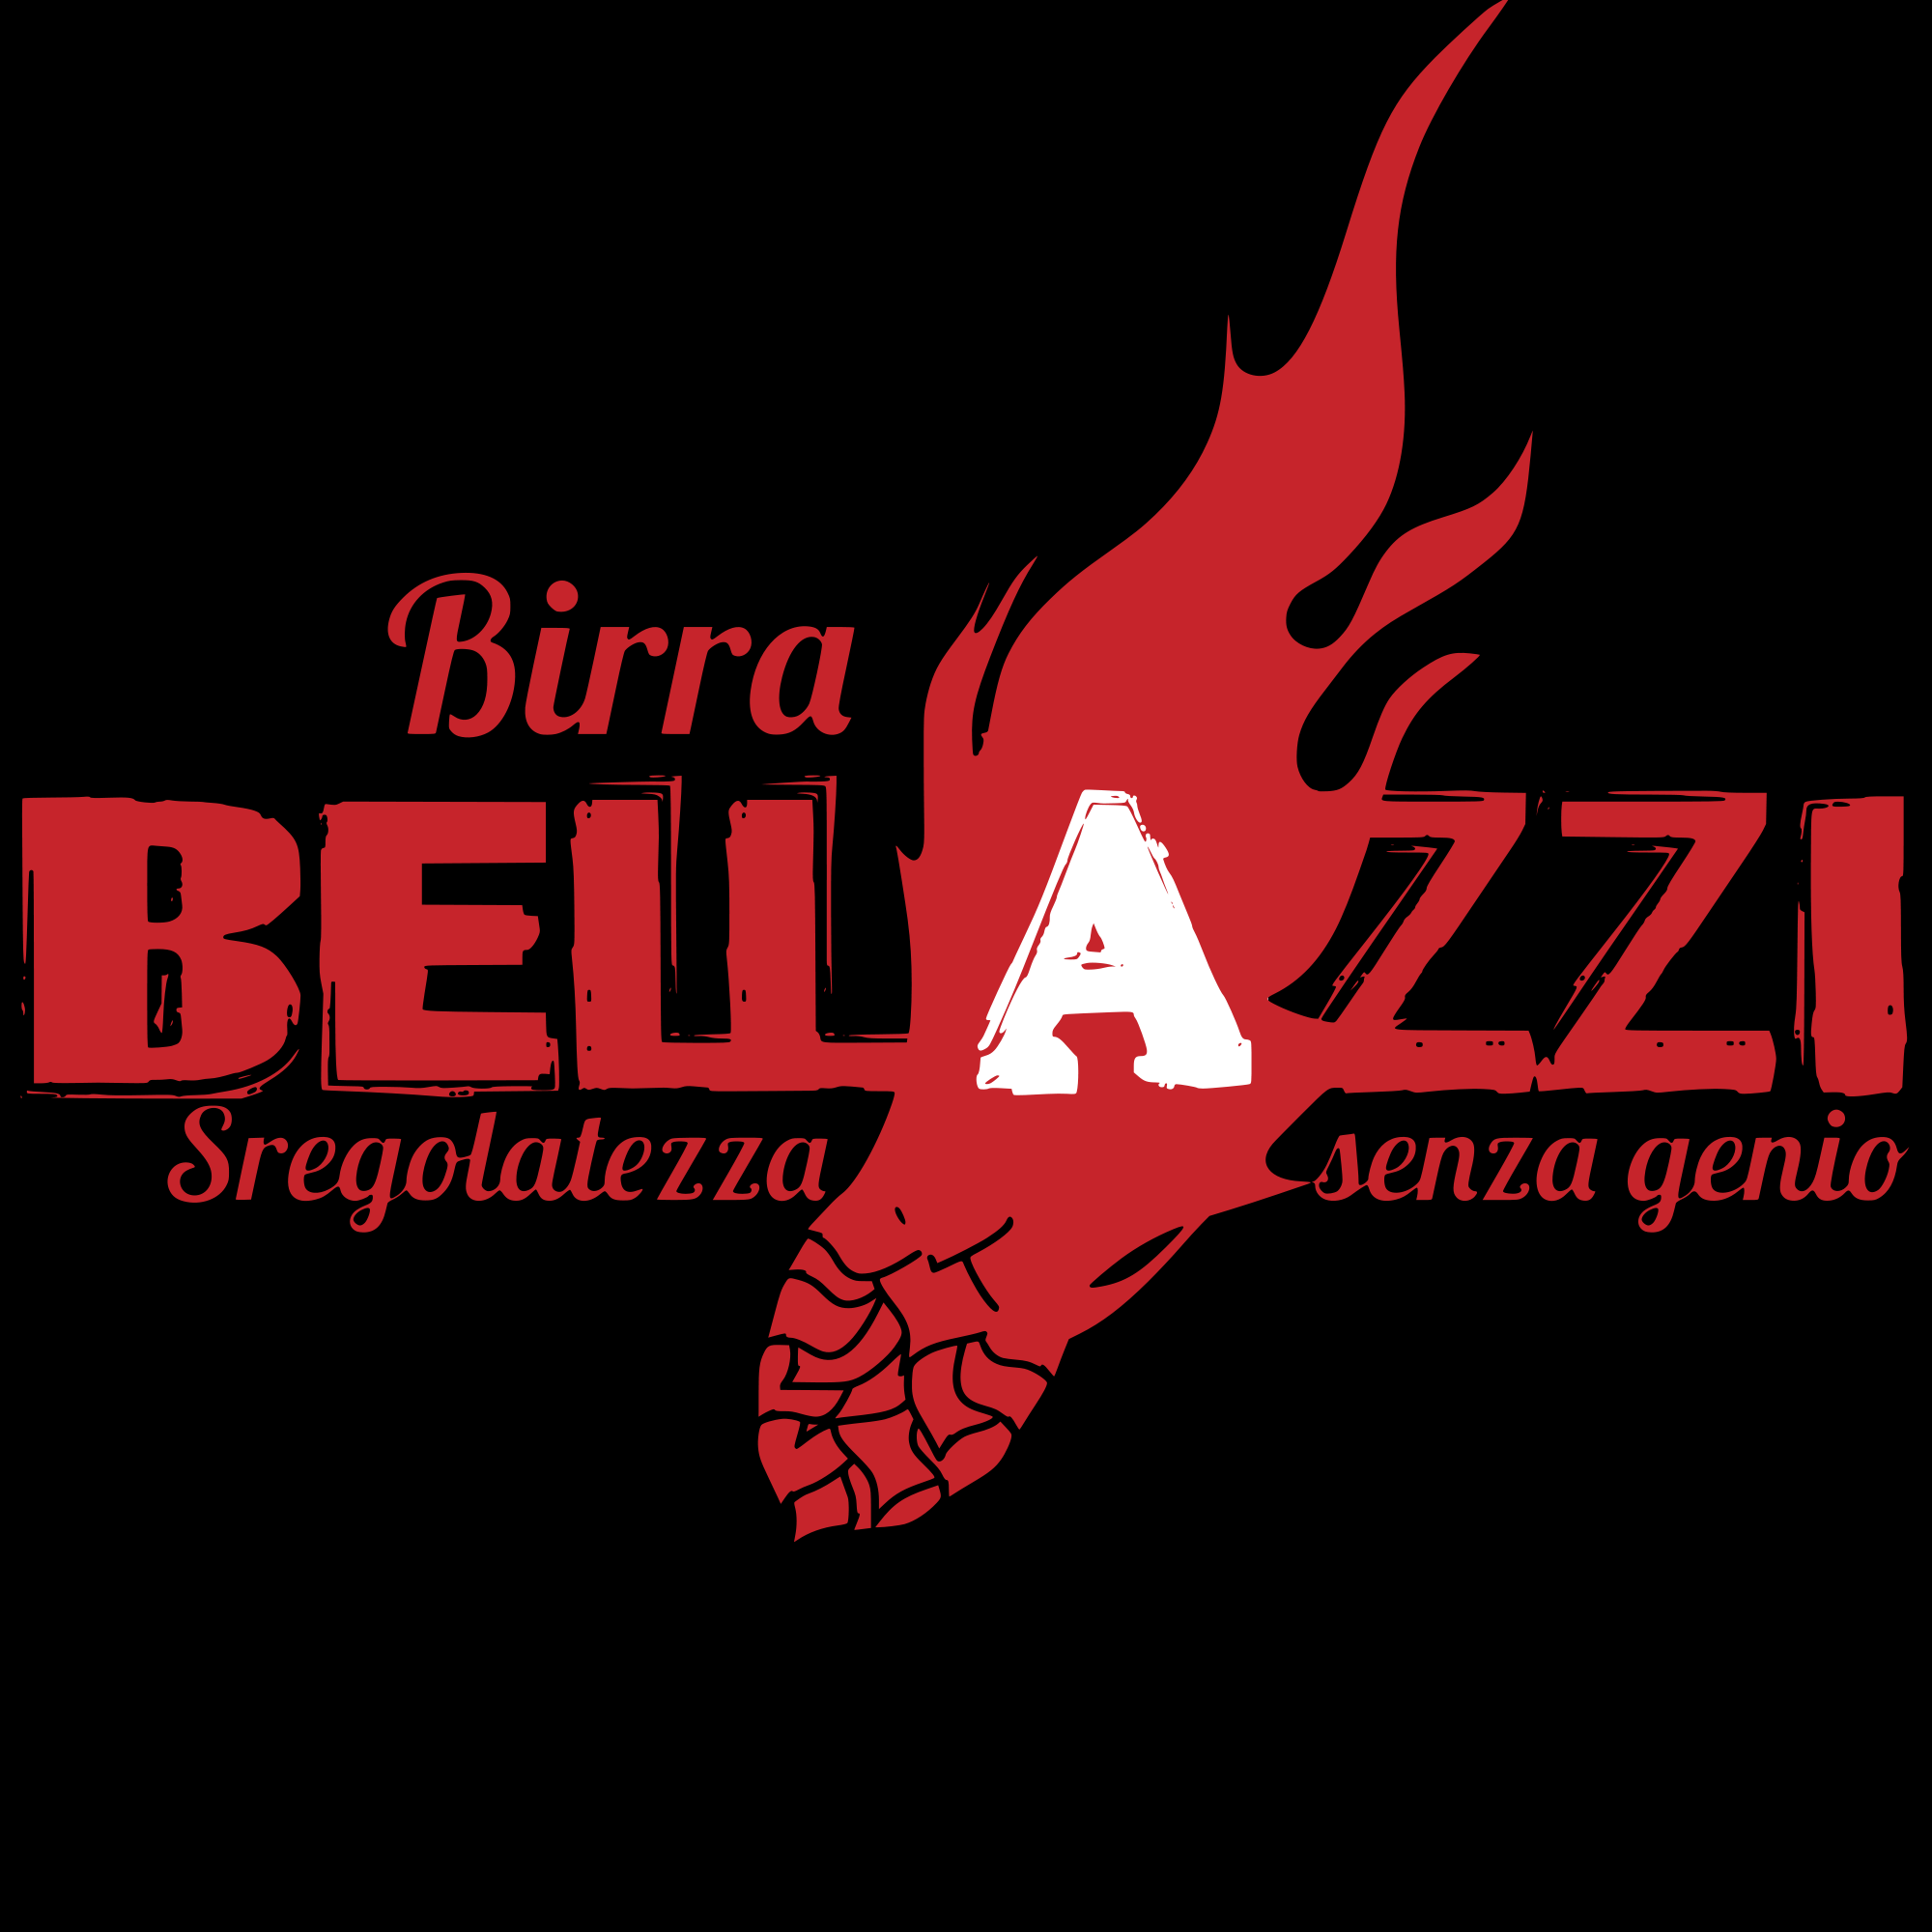 #Birrificioartigianale di #SanLazzarodiSavena #Bologna. #Birraartigianale Bellazzi, #Birrettedipregio sregolate e senza genio #birrartigianale #craftbeer